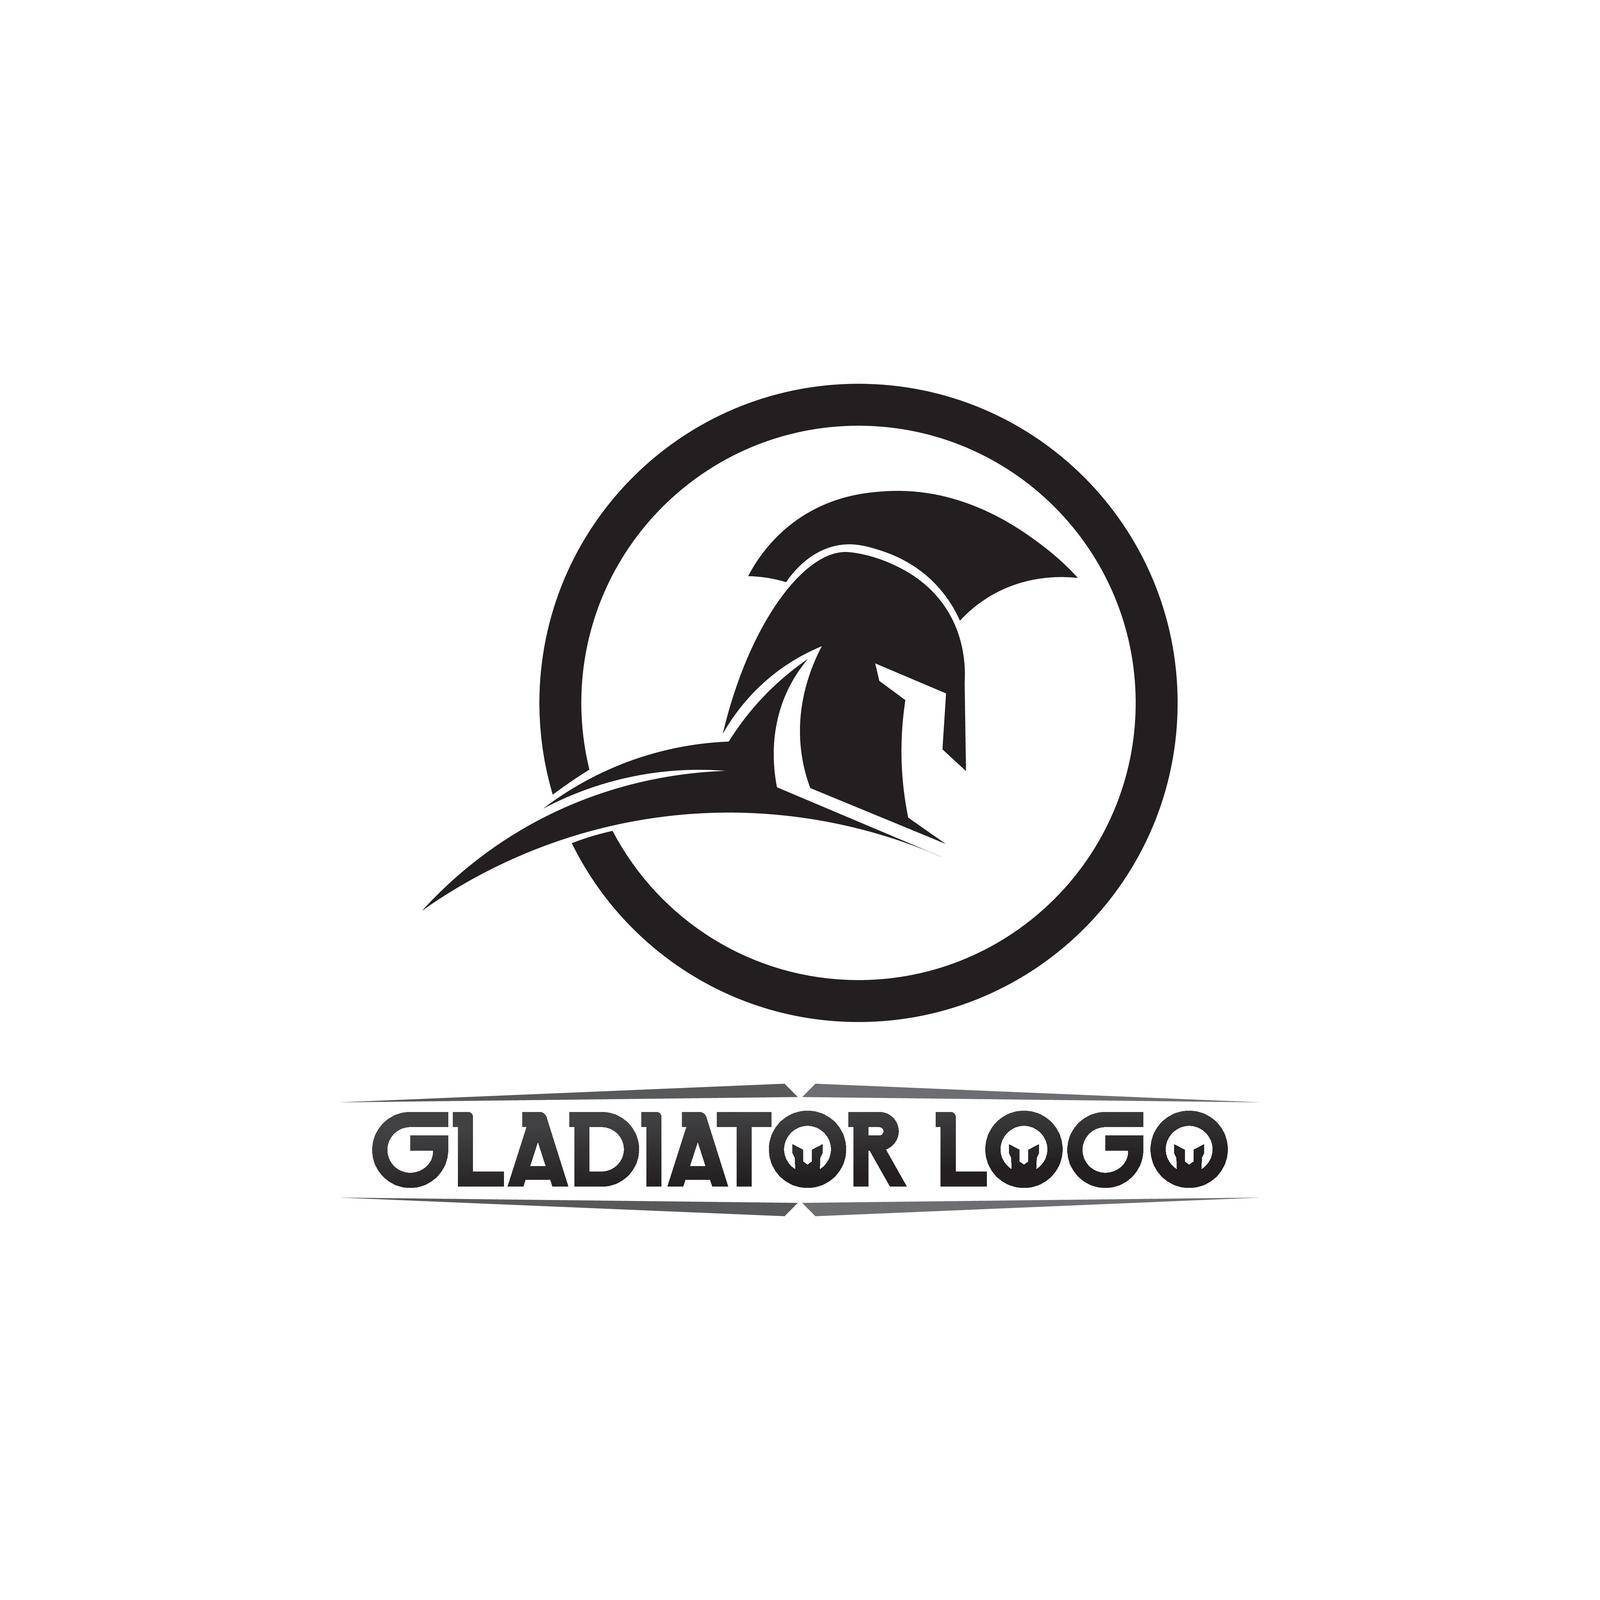 spartan logo black Glaiator and vector design helmet and head black by Anggasaputro